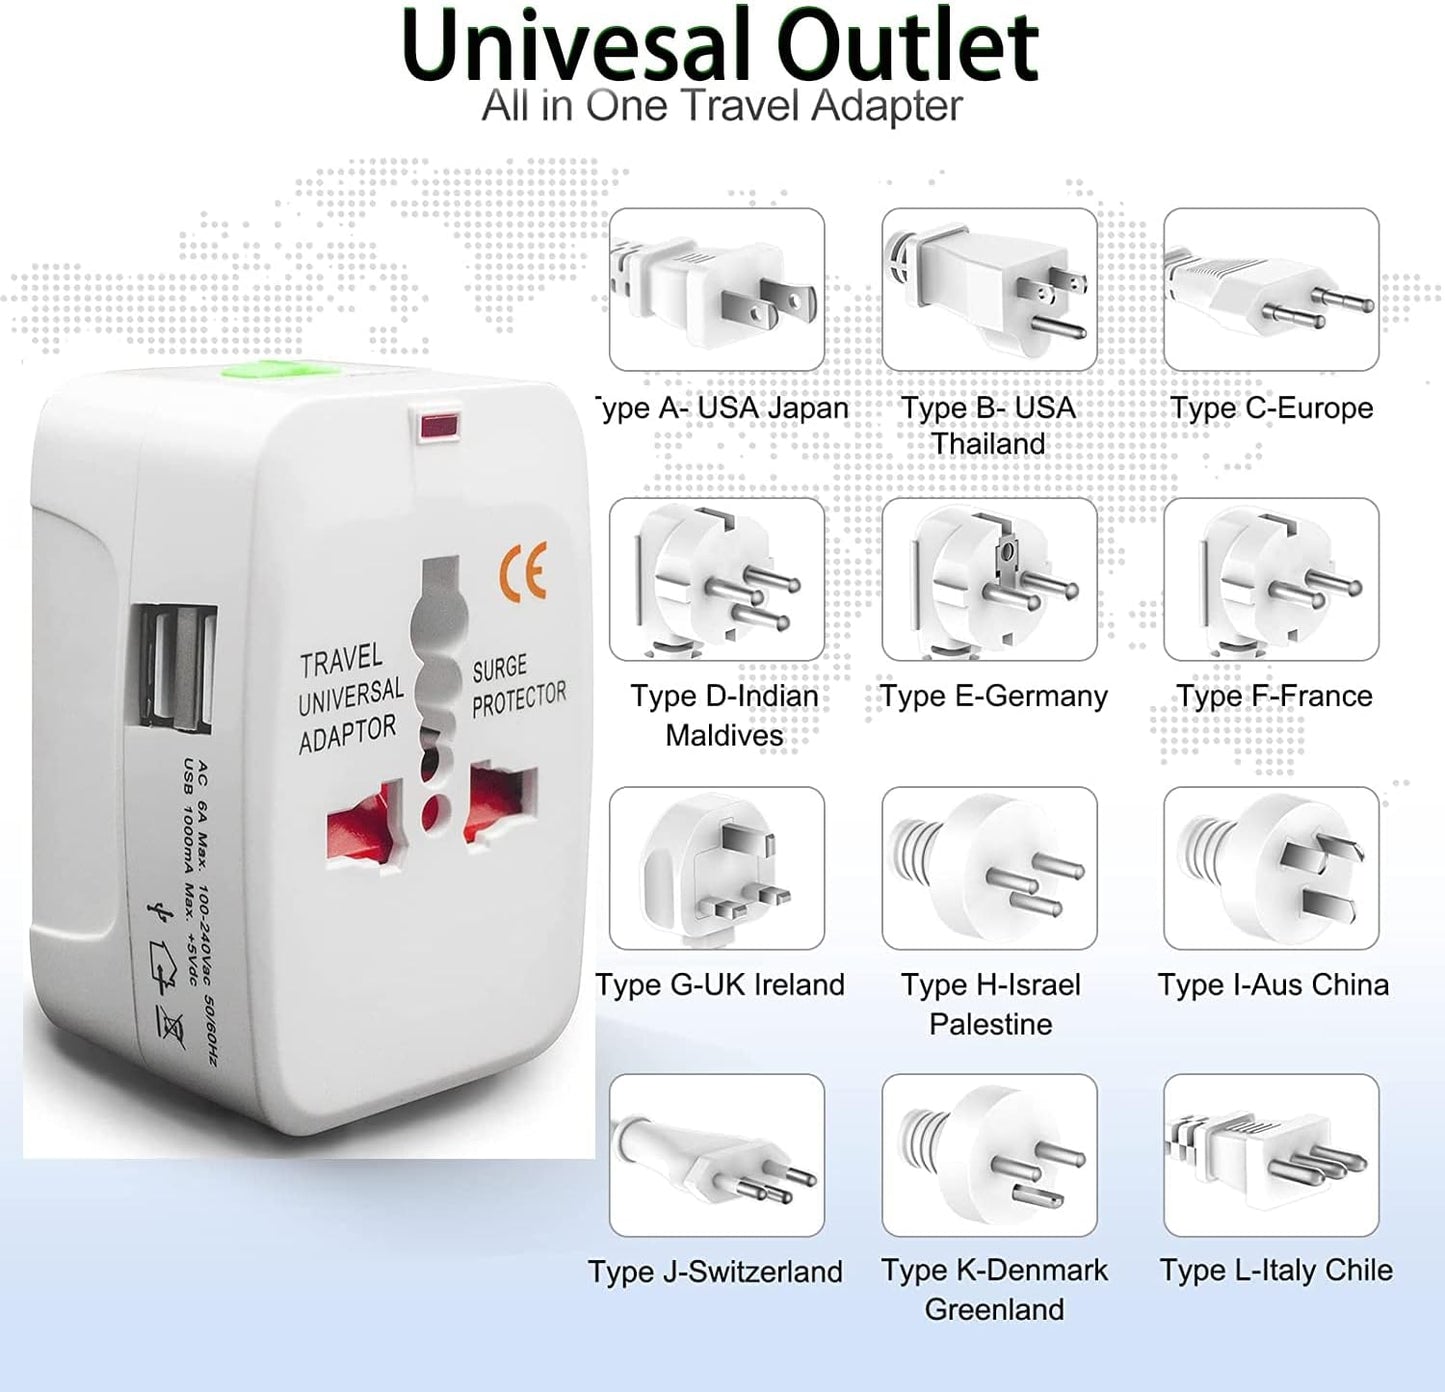 2 Pack Universal Travel Adapter, International Power Adapter with 2 USB Ports, Plug Adapter Travel Adapter Worldwide Universal Charger Power Adapter - for USA, EU, UK, AUS (Double U White 2)